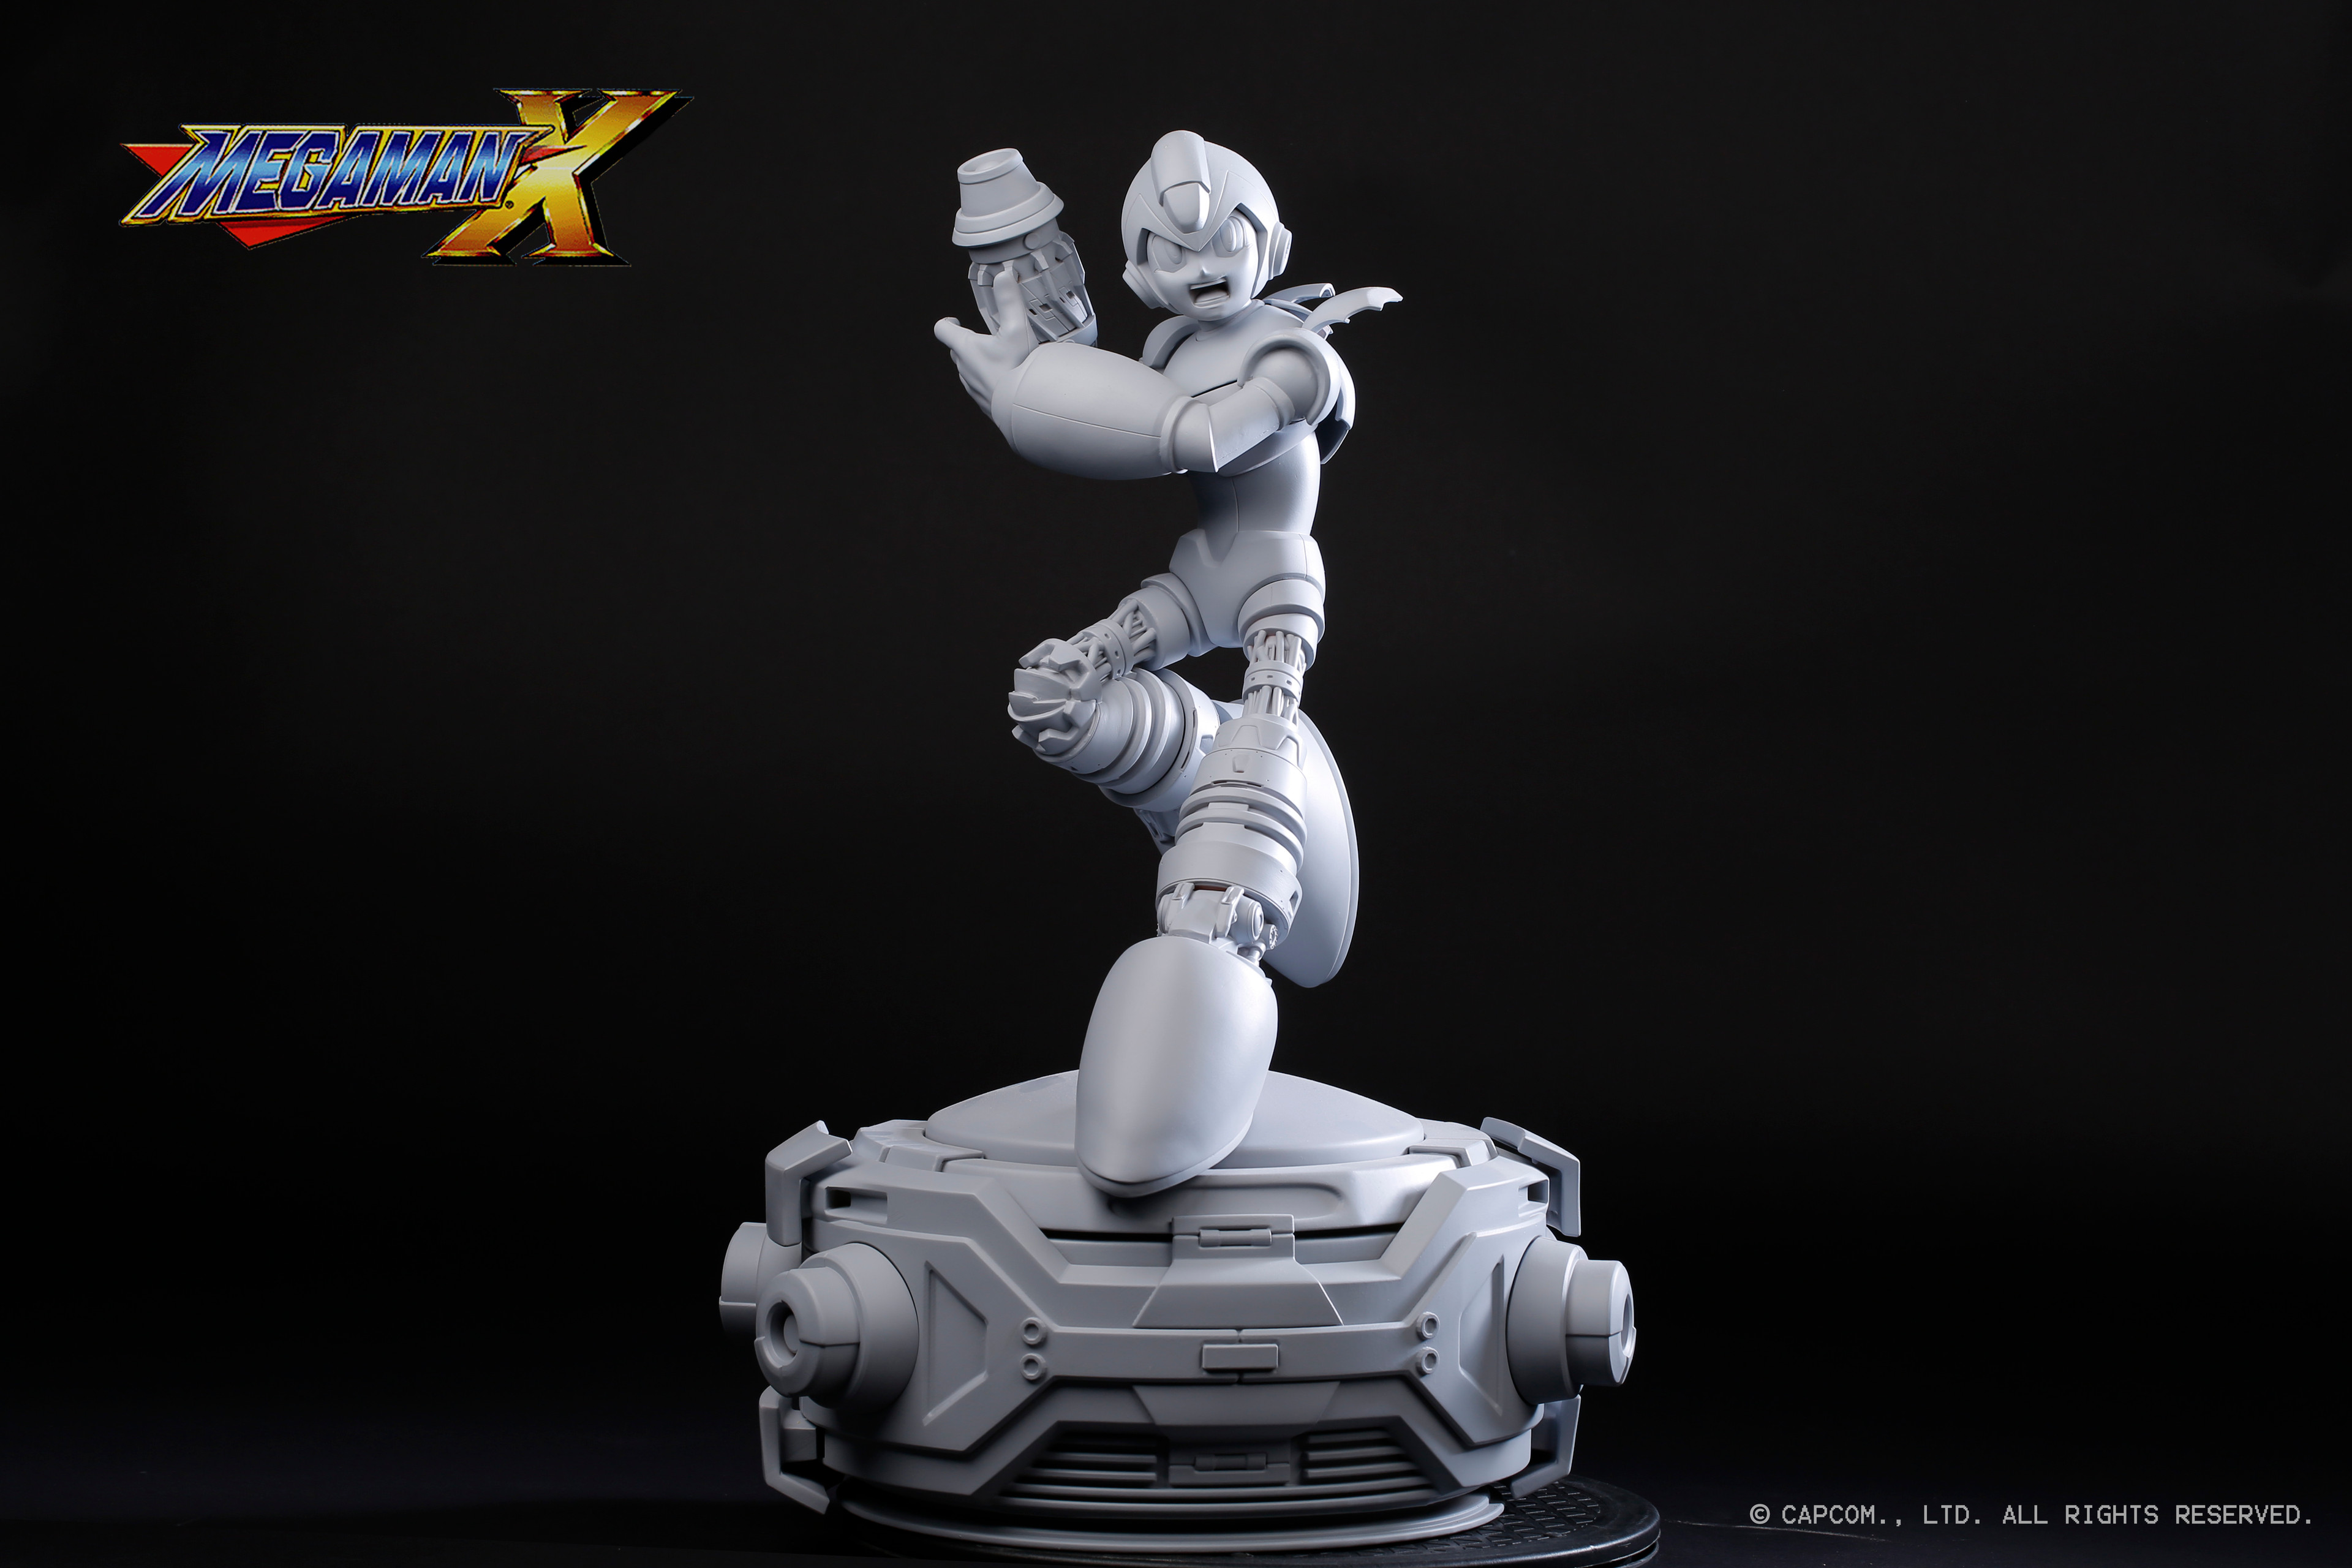 Megaman X Statue (WIP)
Artist: Mufizal Mokhtar